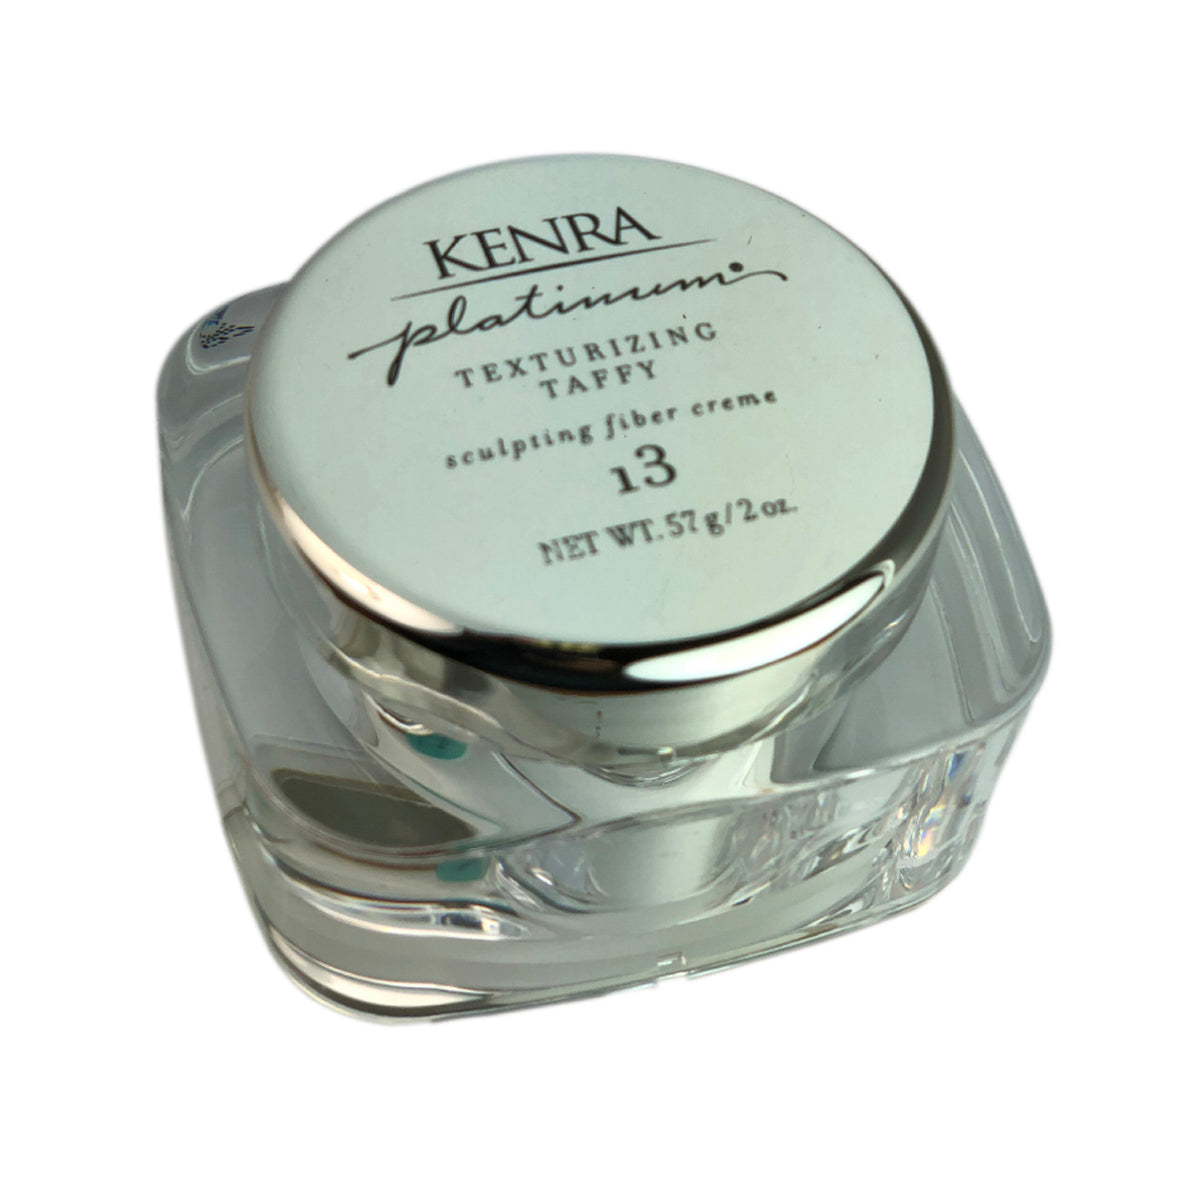 Kenra Platinum Hair Texturizing Taffy Sculpting Fiber Creme #13 2 oz.